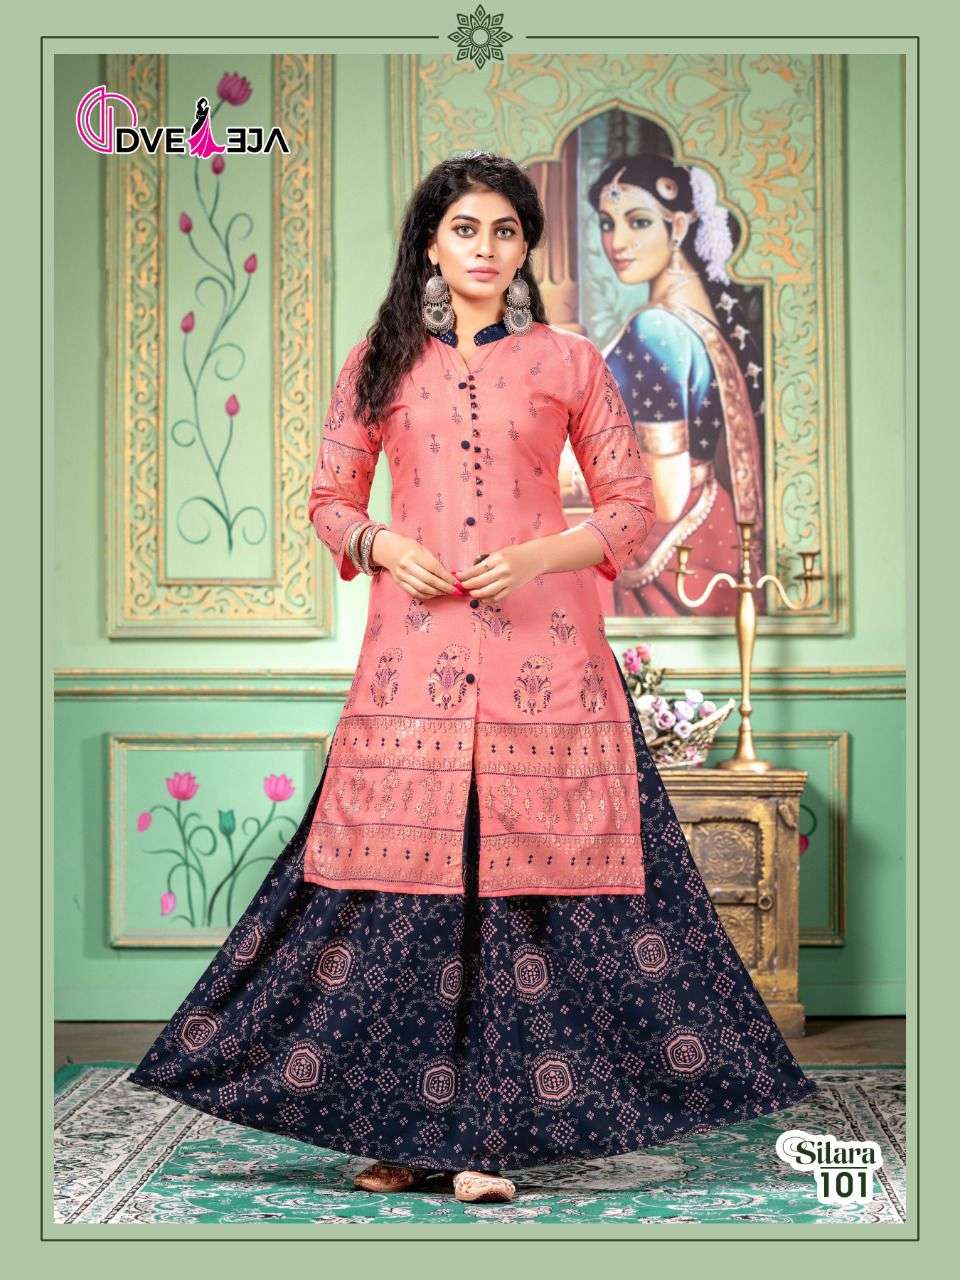 dveeja sitara stylish look designer kurti catalogue manufacturer surat